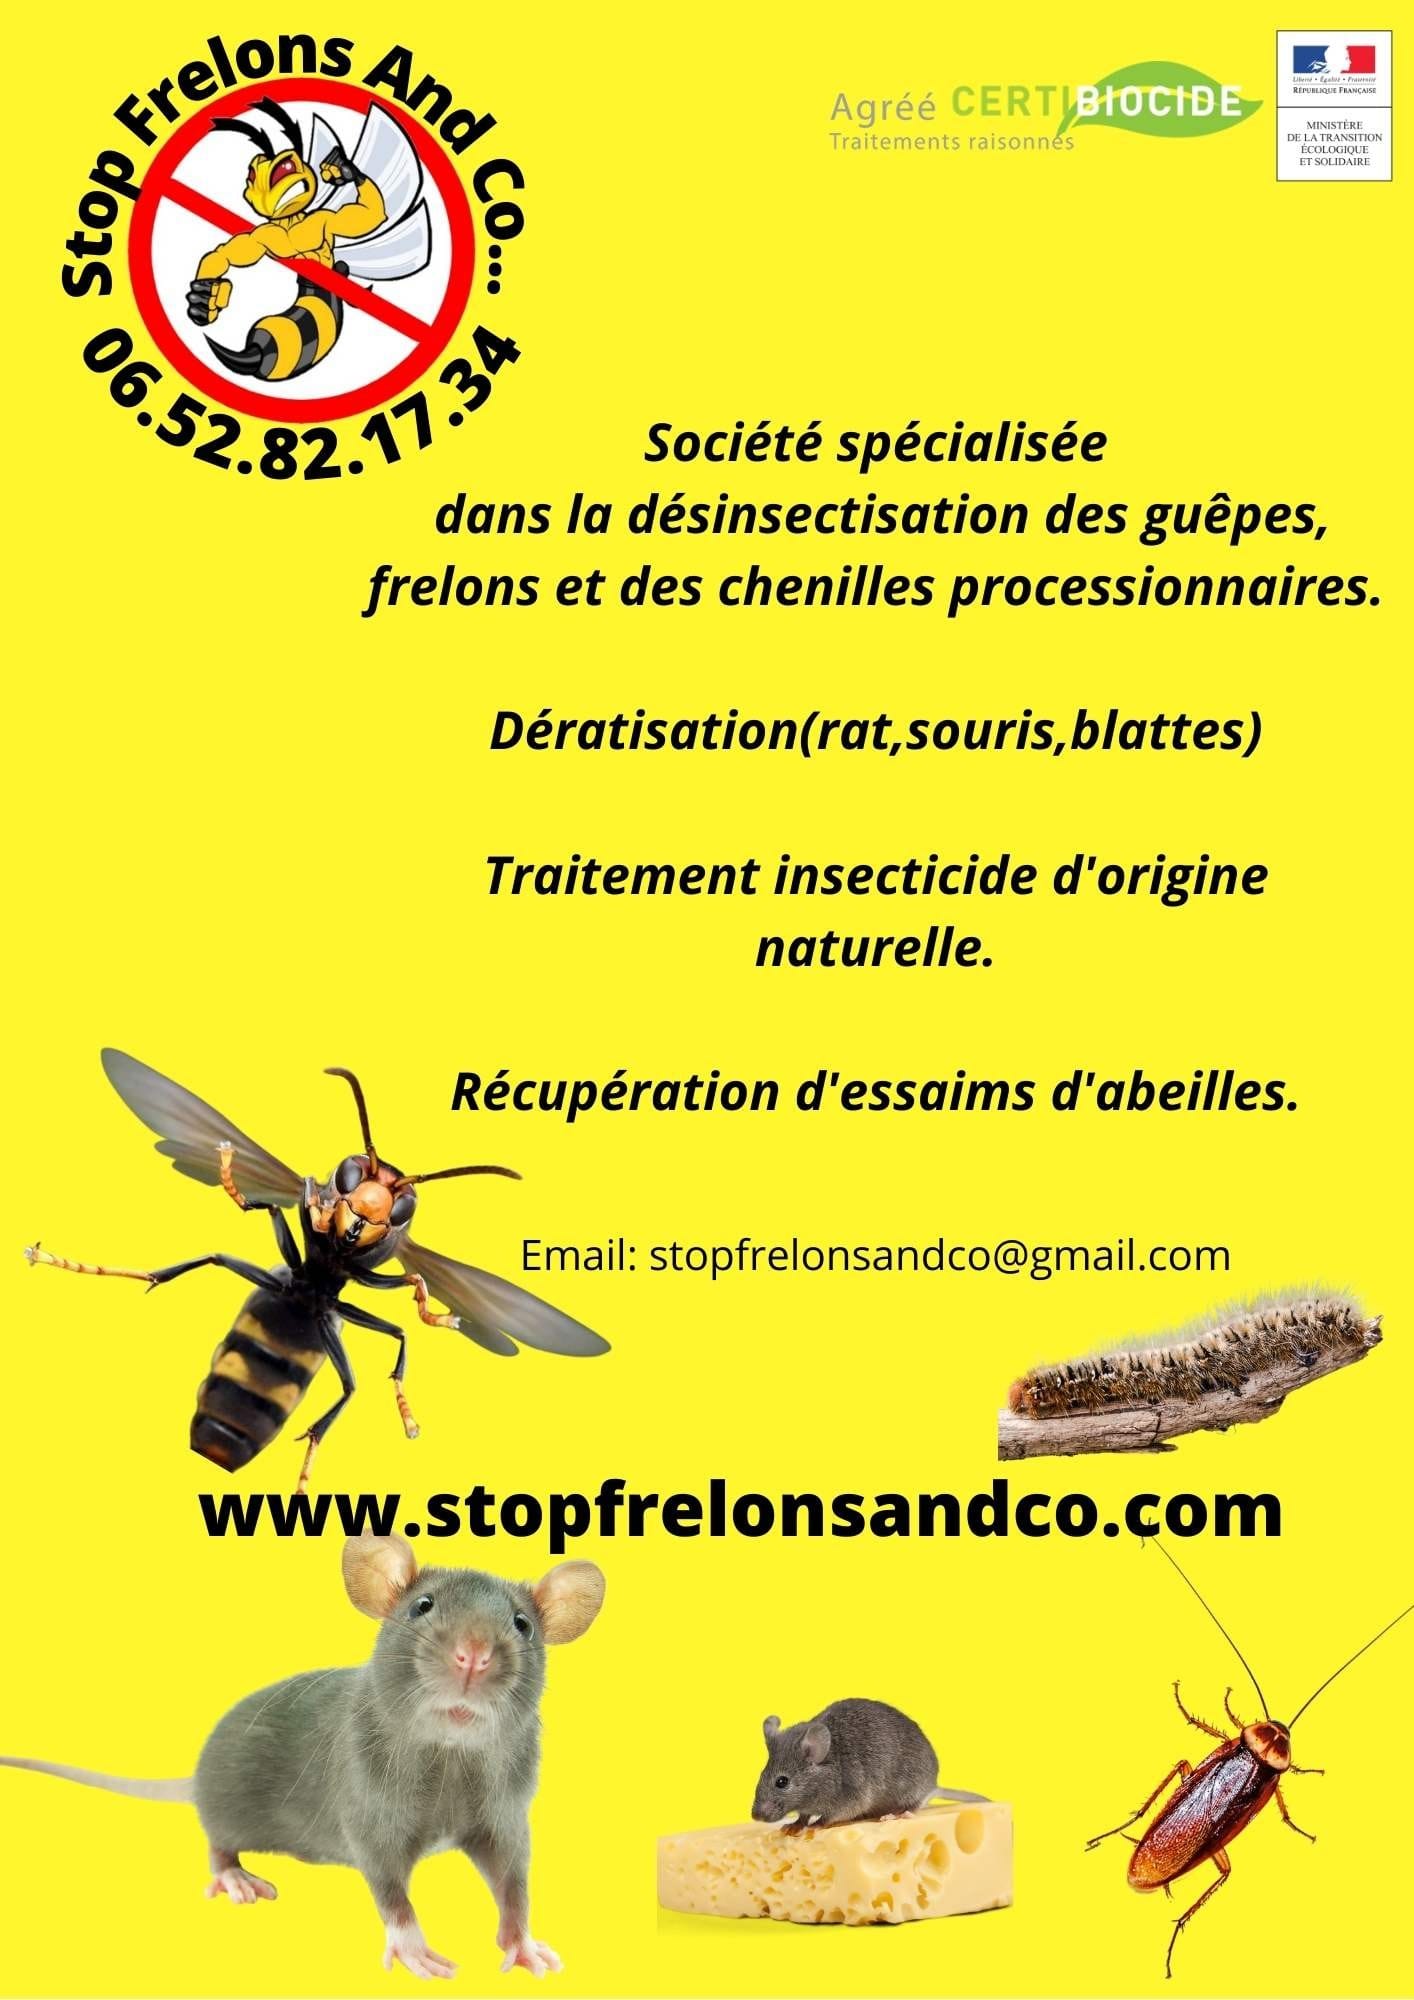 Stop-frelons-and-co-Bouche-du-Rhone.jpg